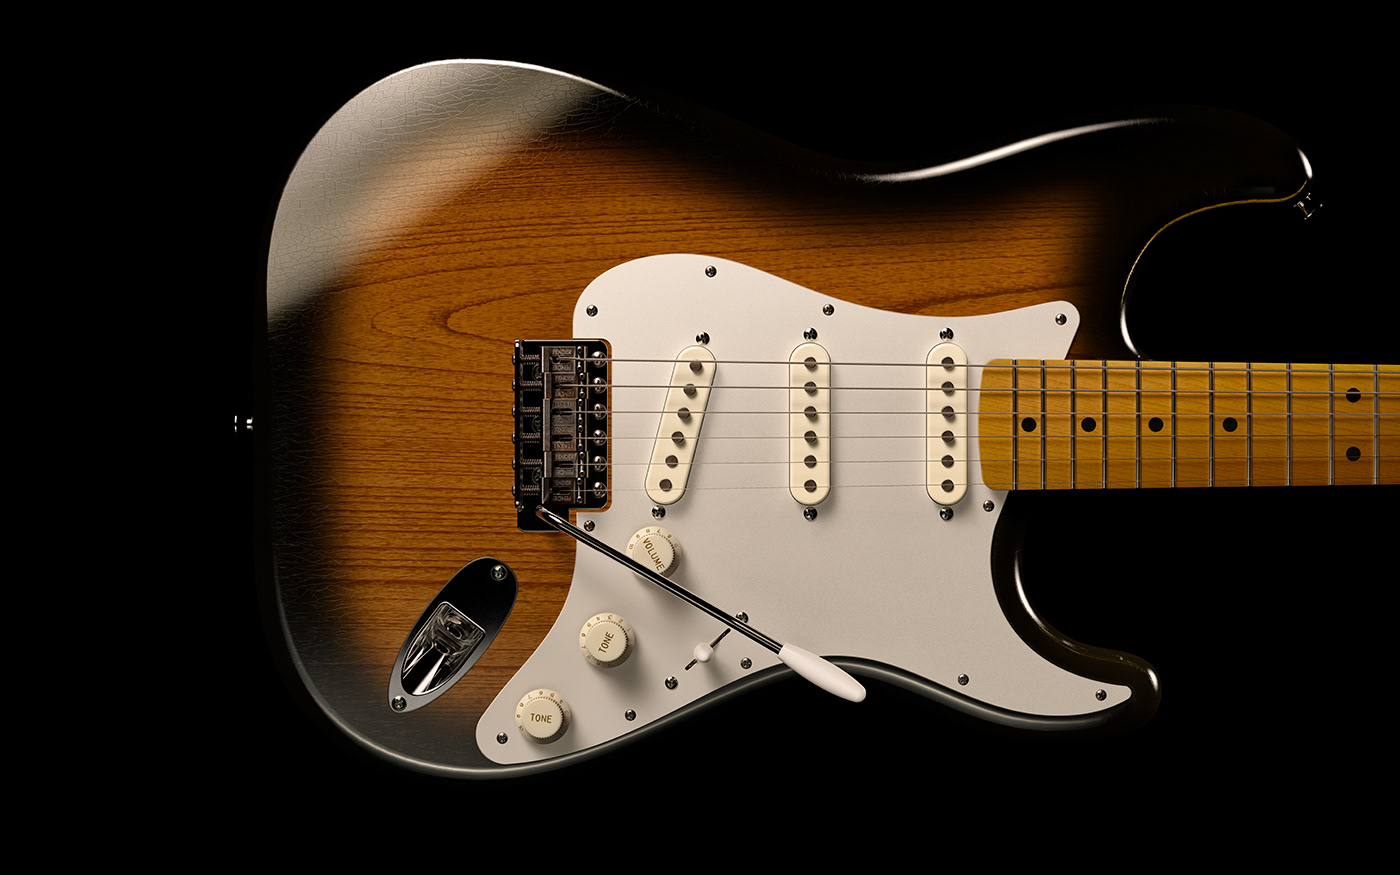 fender stratocaster CGI Render visualization guitar